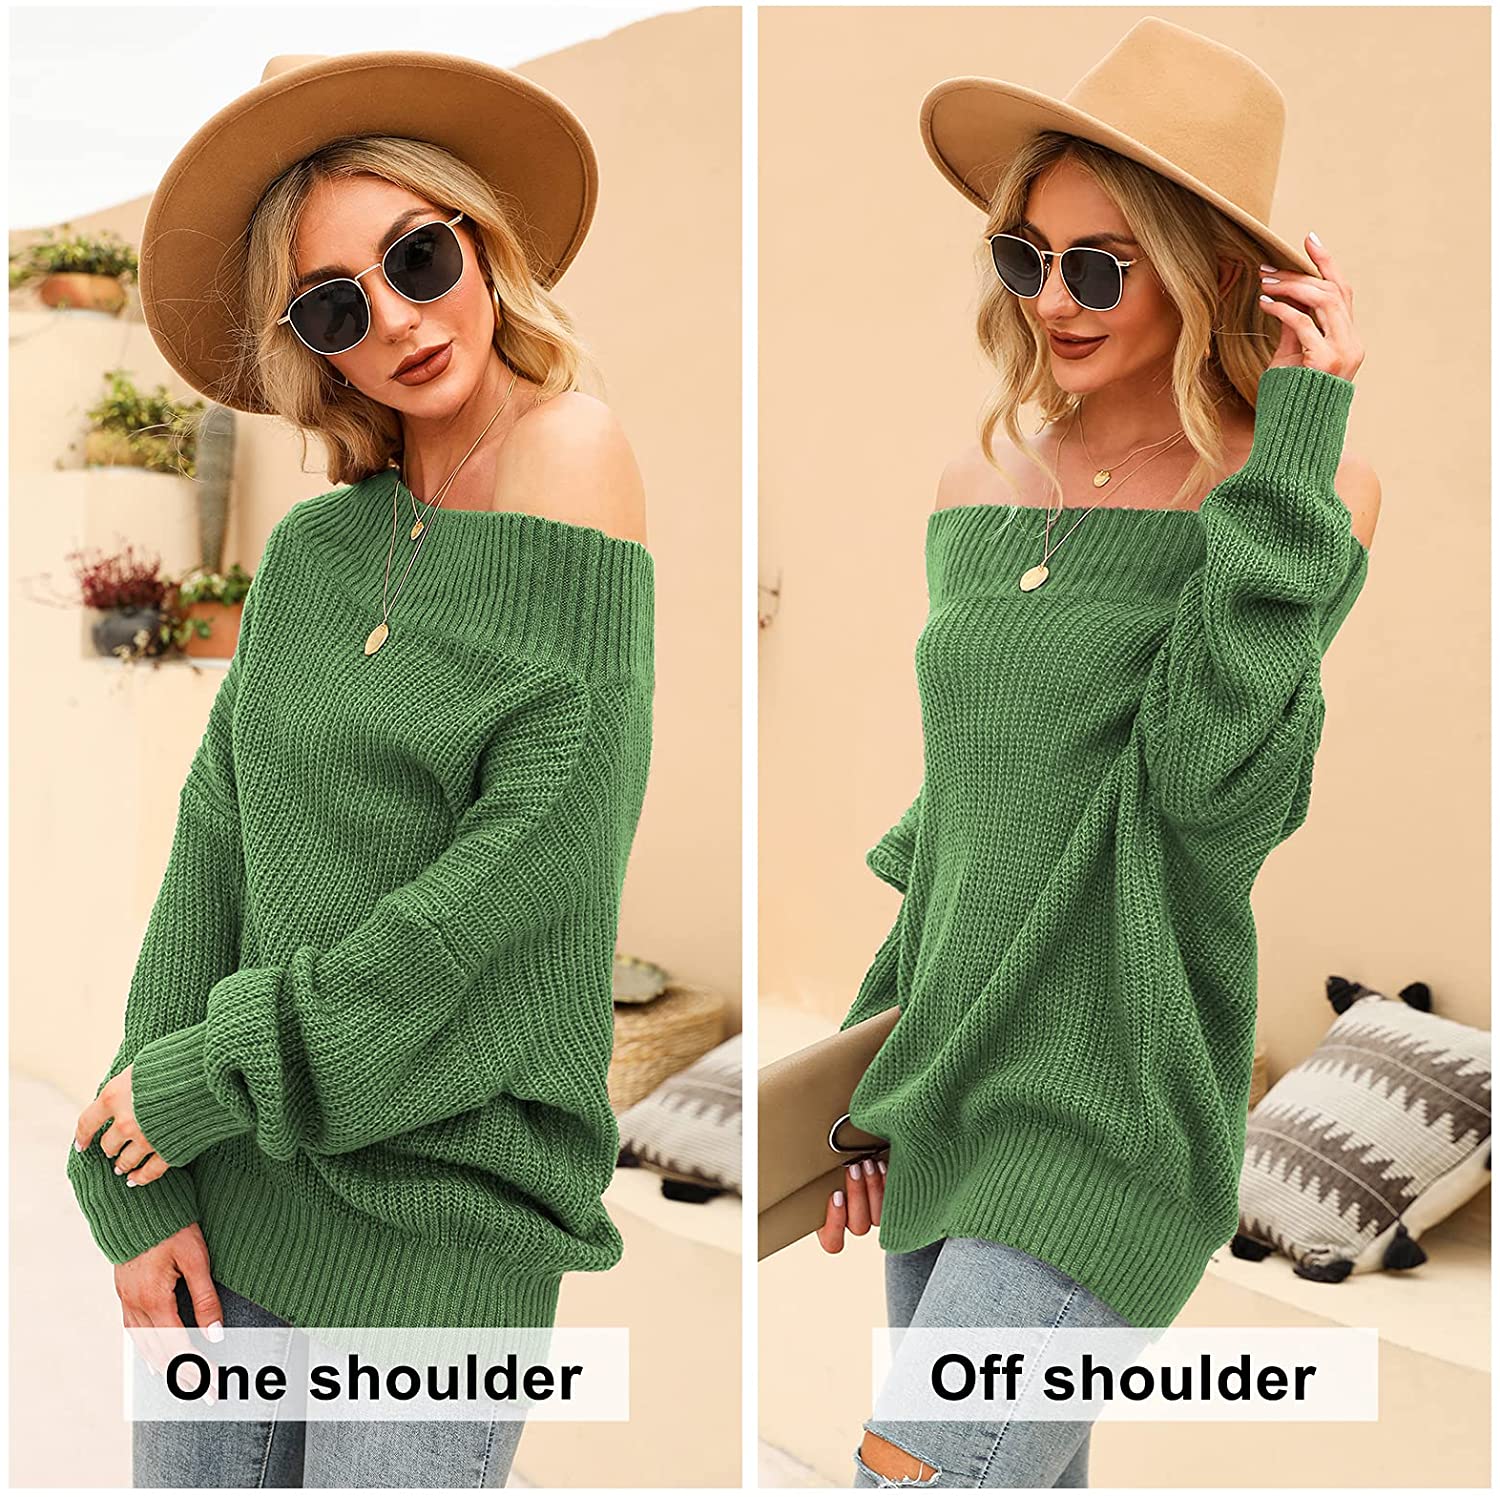 Sugorky - Off-Shoulder Oversized Sweater / Leggings